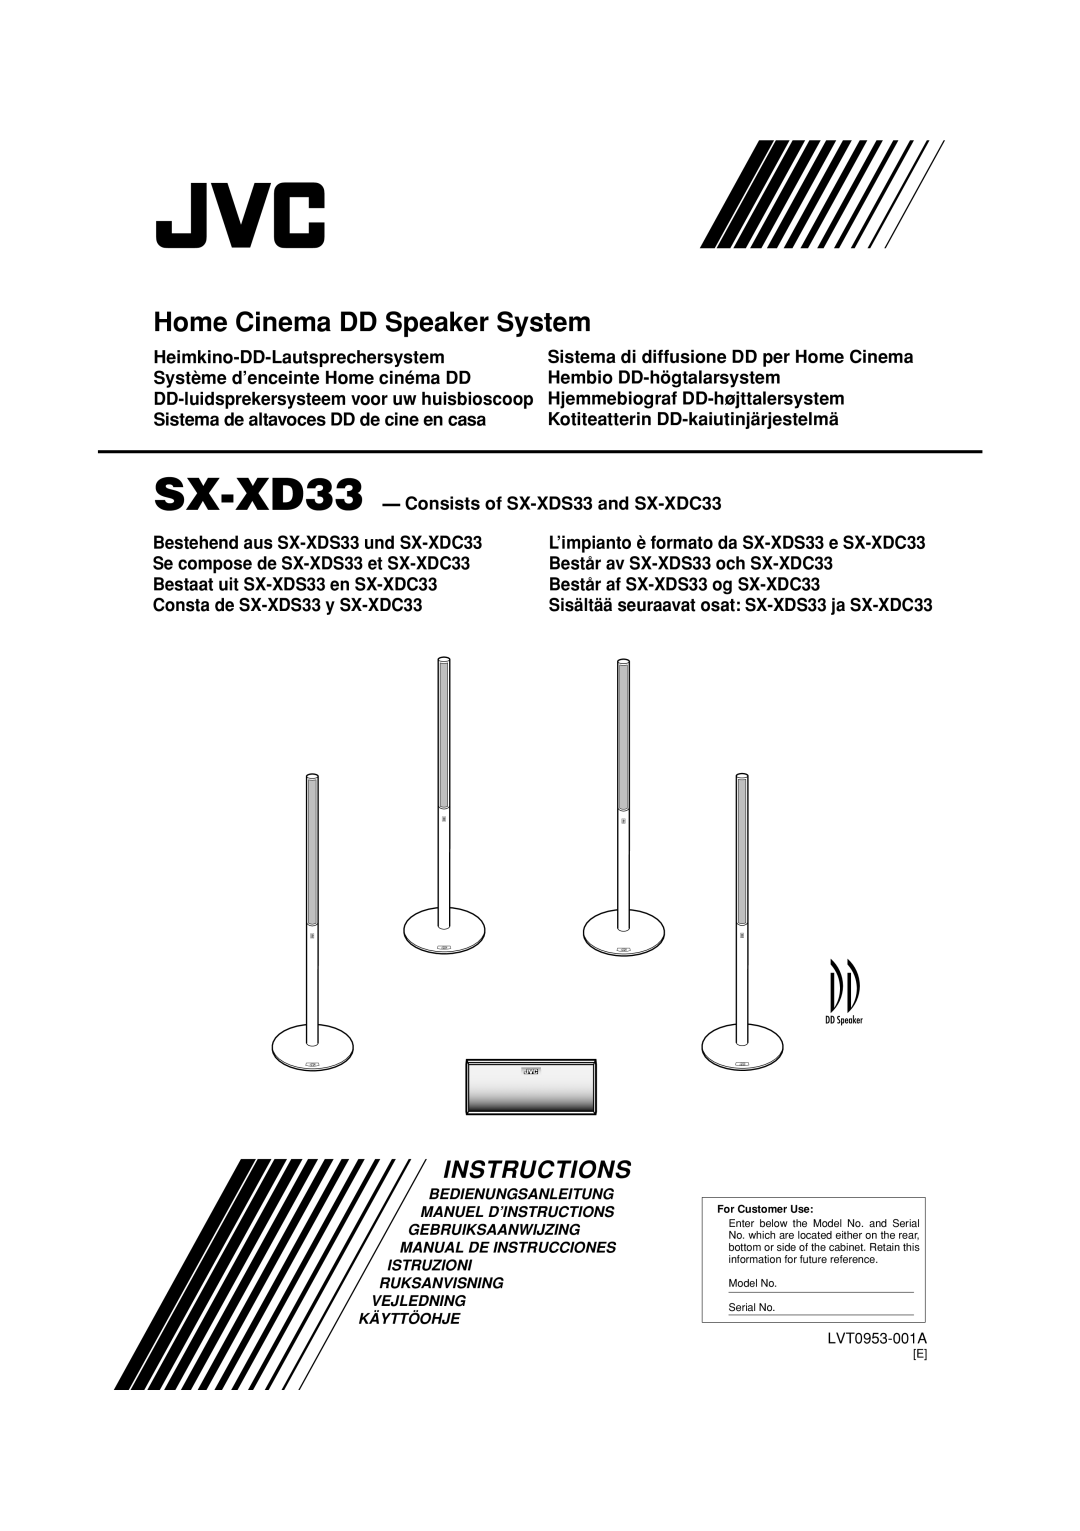 JVC manual SX-XD33 - Consists of SX-XDS33and SX-XDC33, Bestehend aus SX-XDS33und SX-XDC33, Consta de SX-XDS33y SX-XDC33 